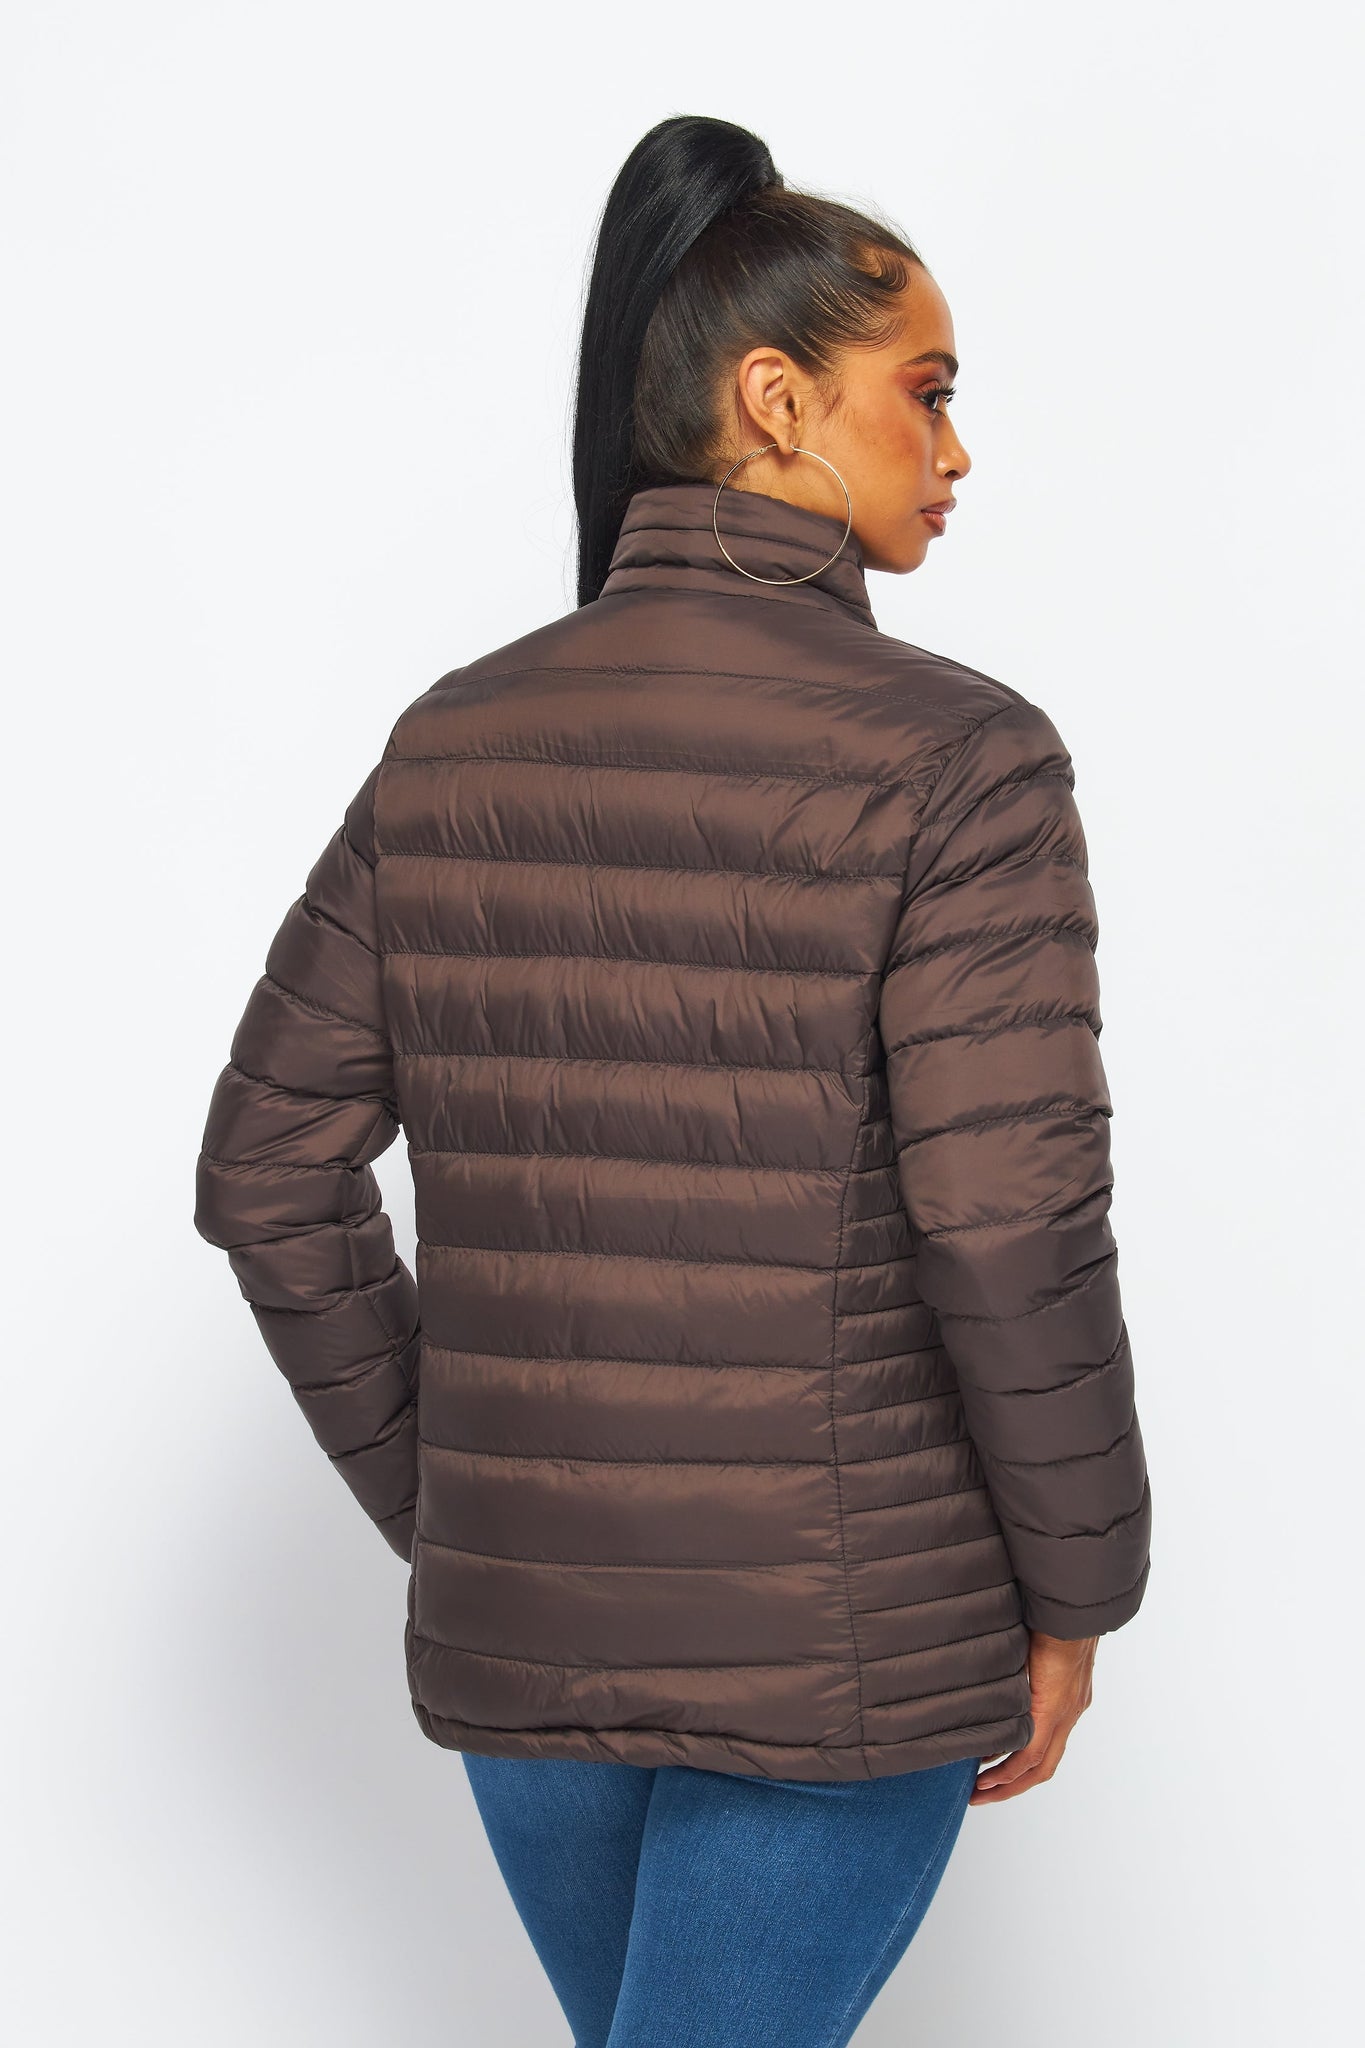 Women's Soft Coated Winter Puffer Jackets-LJ640 - BROWN